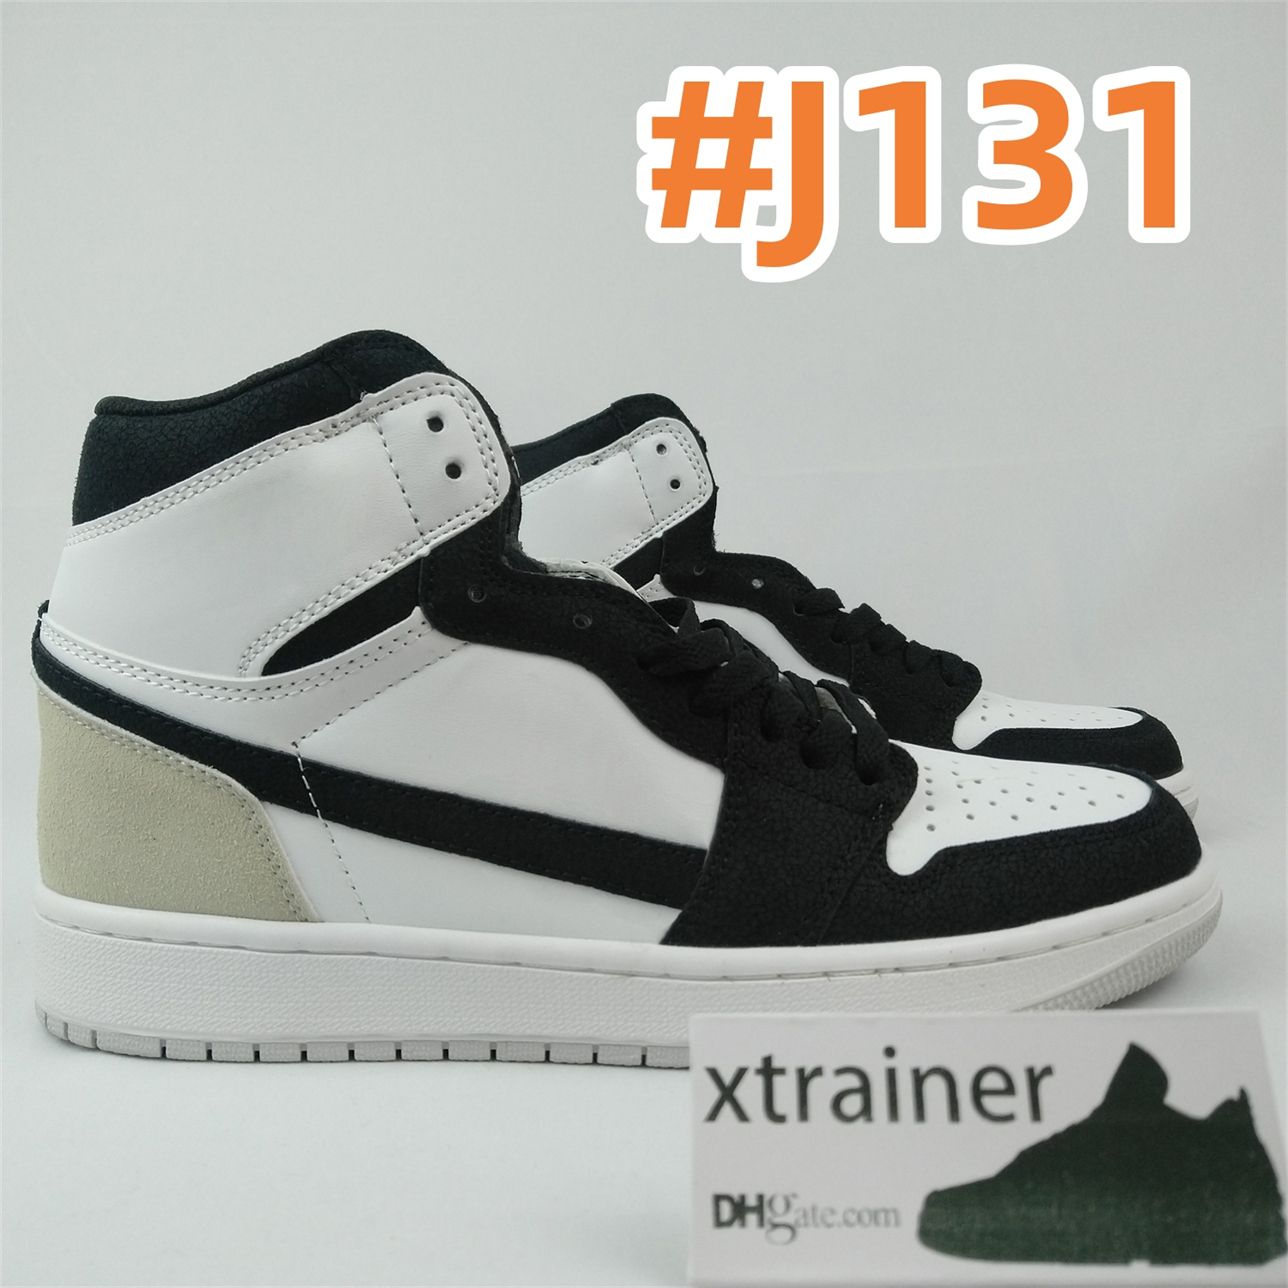 # J131